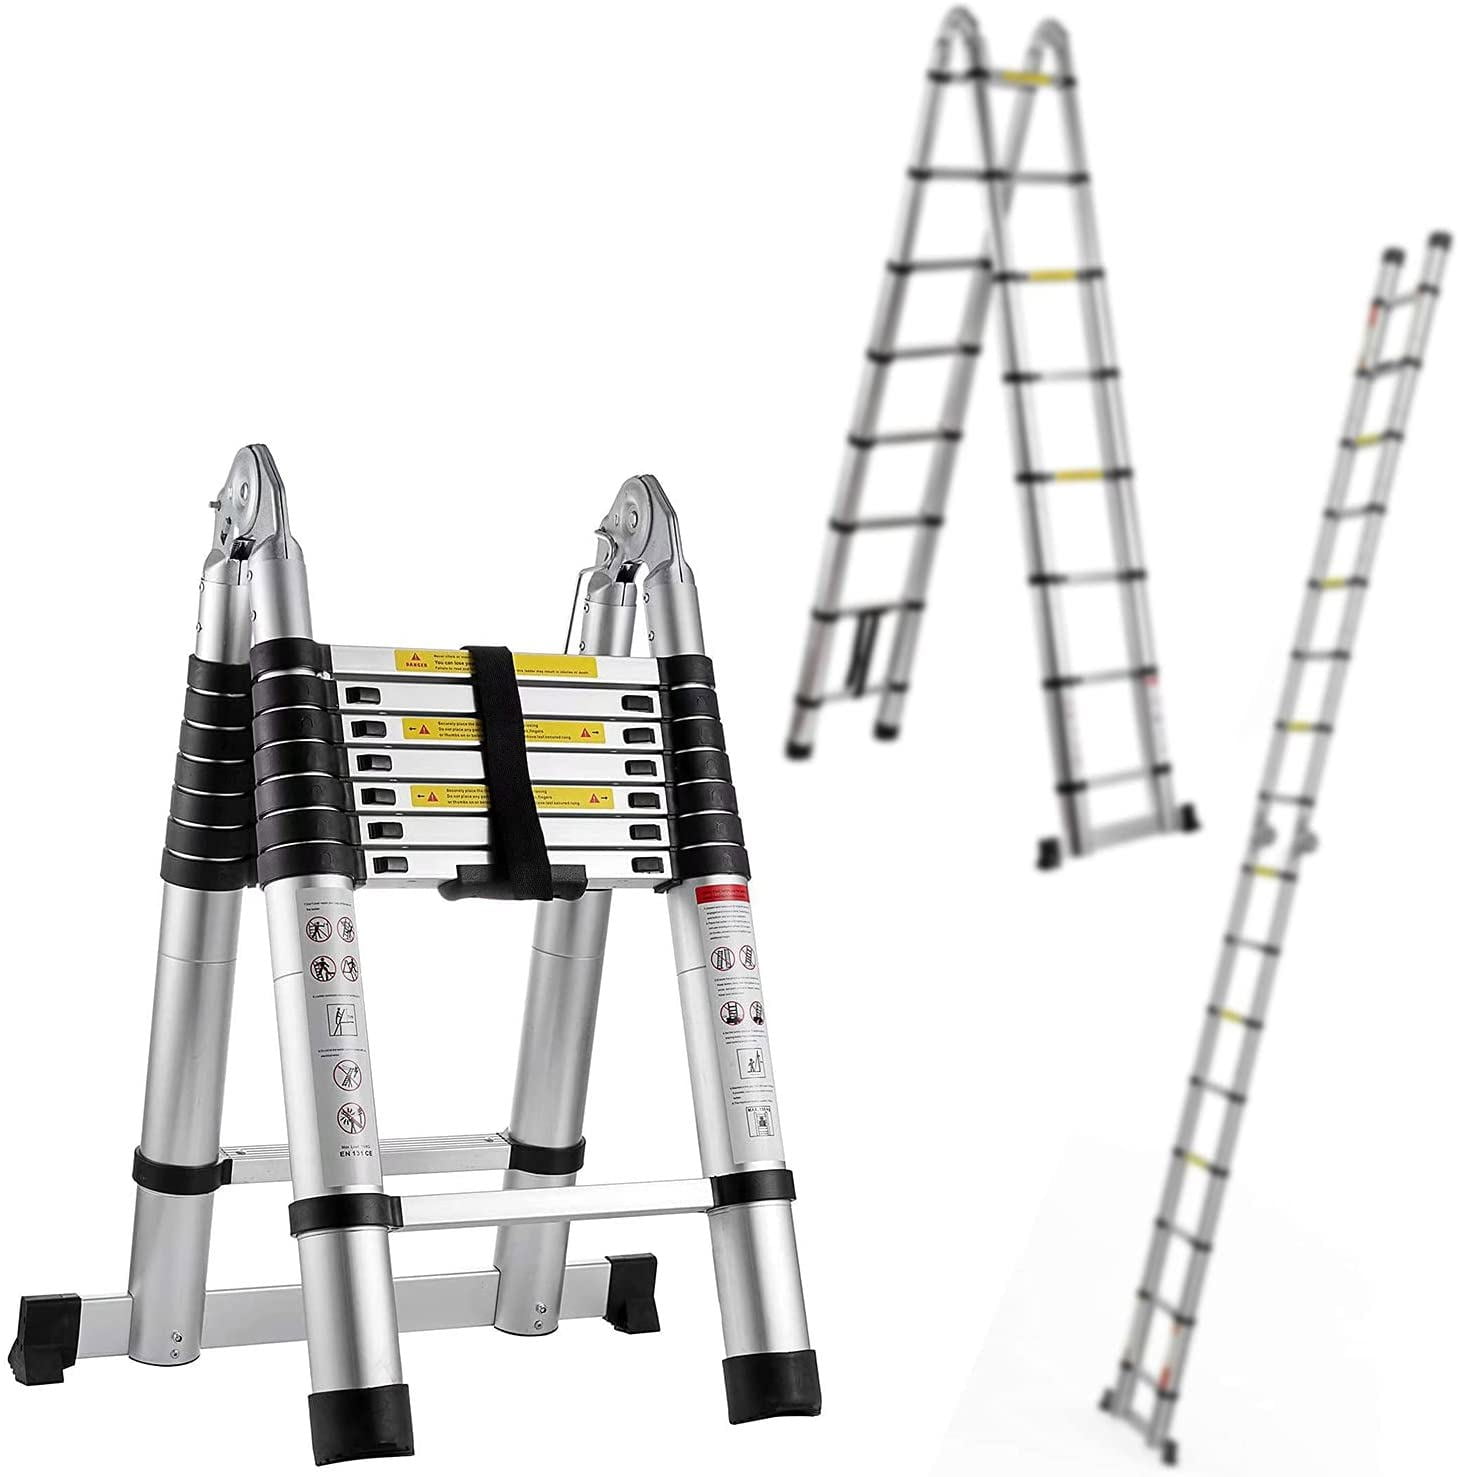 Autofather 2 Step Ladder Safety Non Slip Mat Heavy Duty Steel Folding Portable Stepladder Kitchen Stool Home Garden Tool DIY